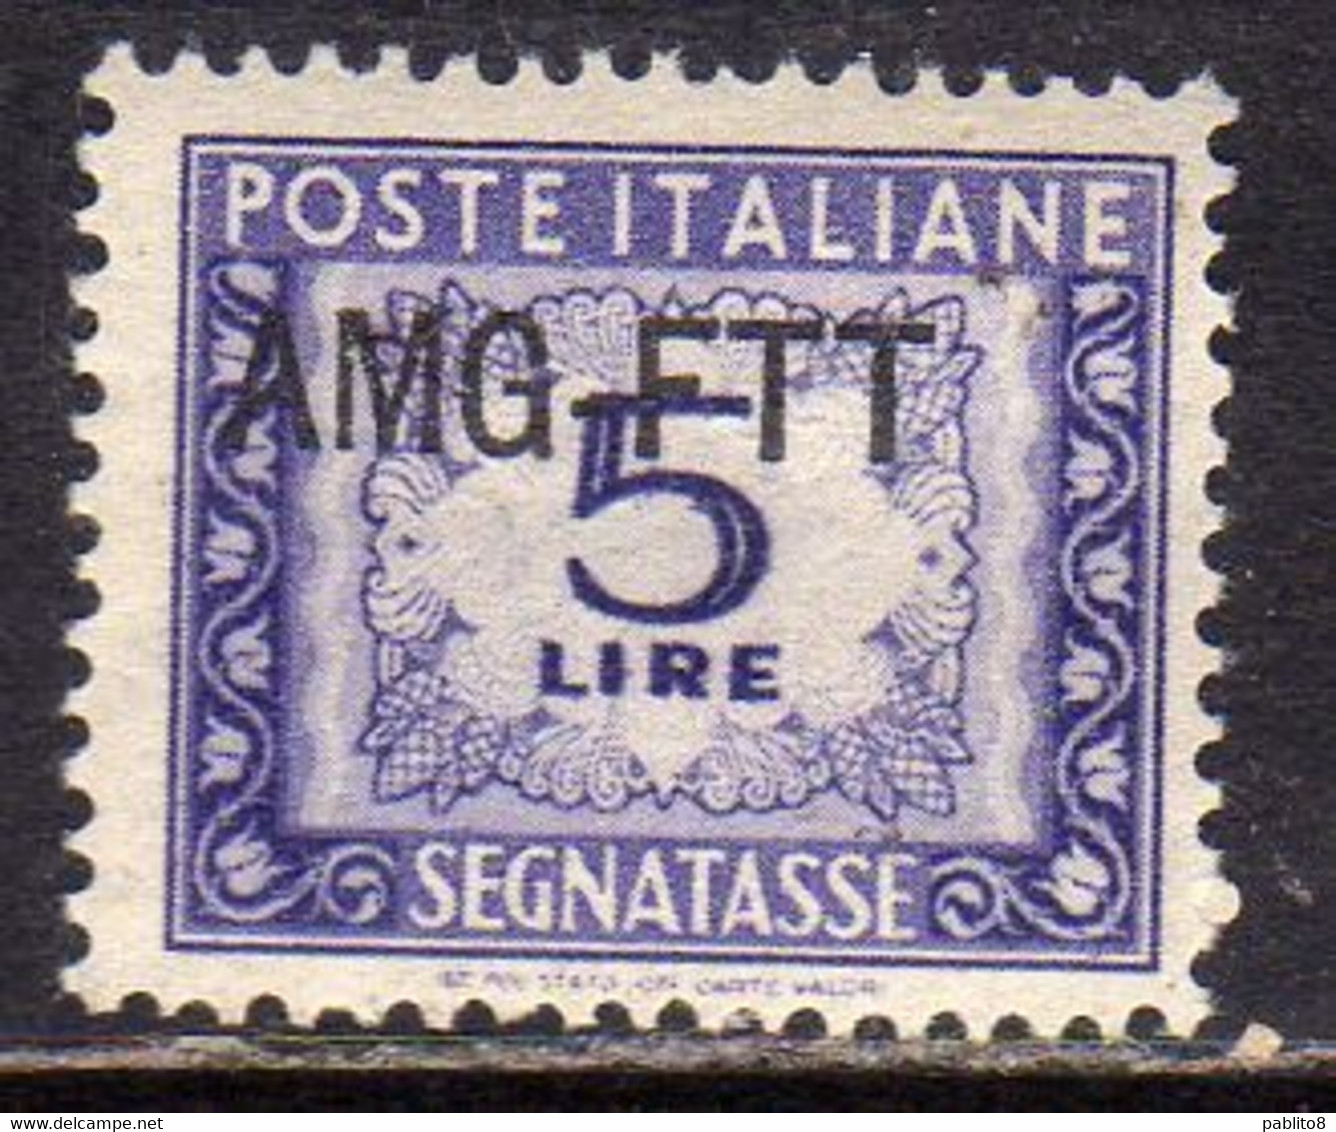 TRIESTE A 1949 1954 VARIETÀ VARIETY AMG-FTT SOPRASTAMPATO D'ITALIA ITALY SEGNATASSE POSTAGE DUE TAXES TASSE LIRE 5 MNH - Taxe